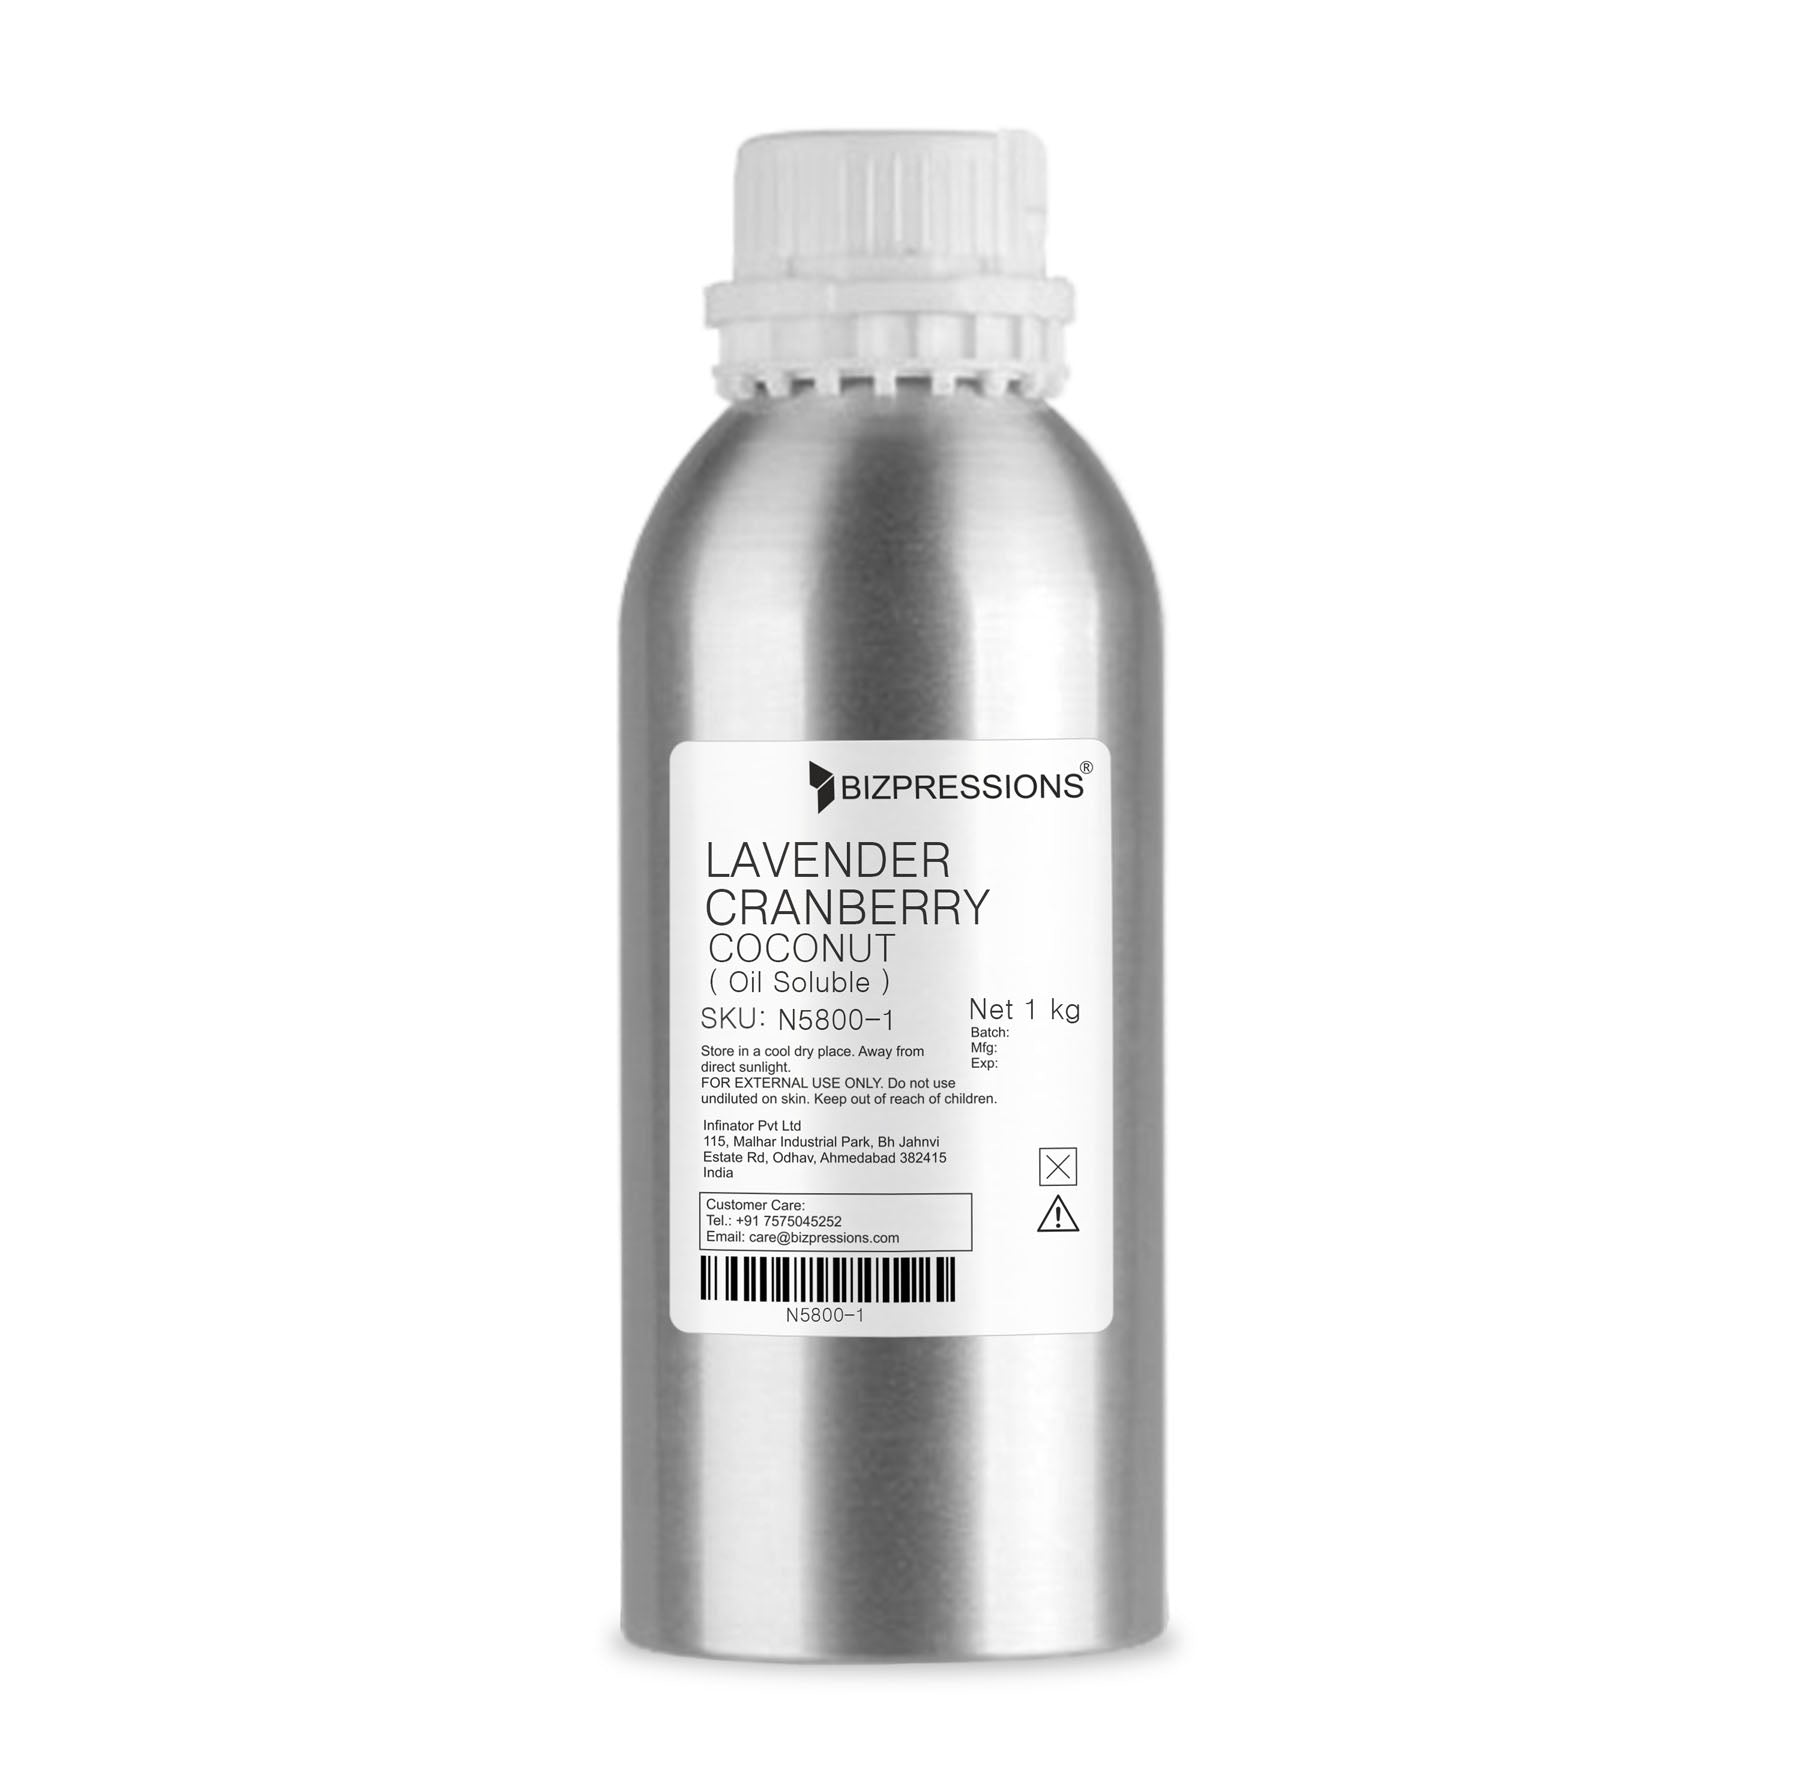 LAVENDER CRANBERRY COCONUT - Fragrance ( Oil Soluble ) - 1 kg